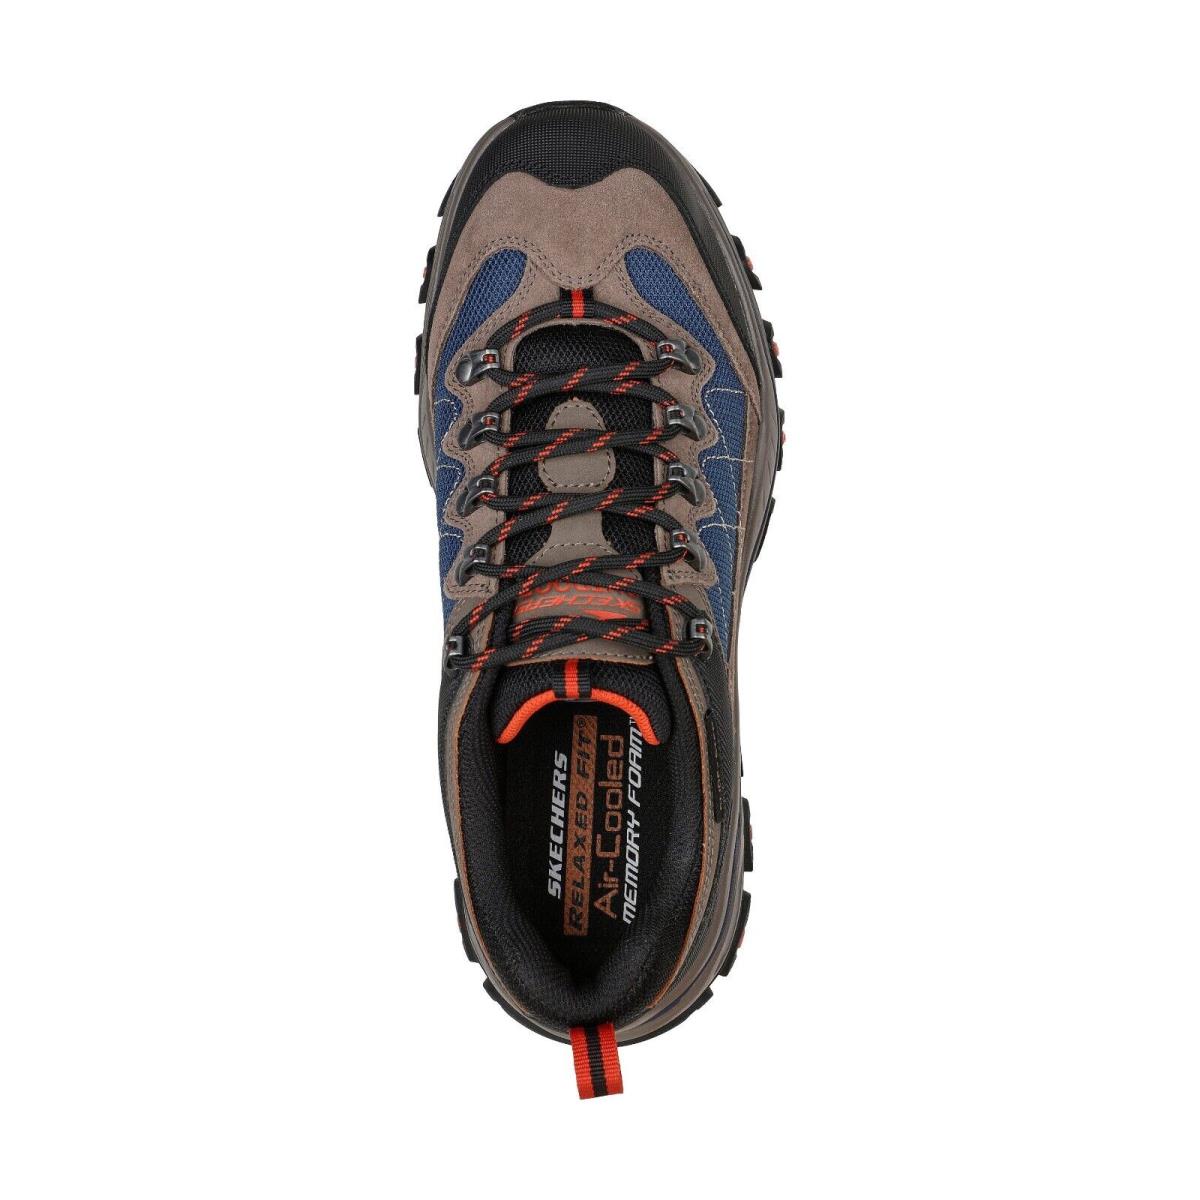 Men`s Skechers Catapult Valard Hiking Shoes 210313 /bkbl Multi Sizes Black/blue - Black/Blue